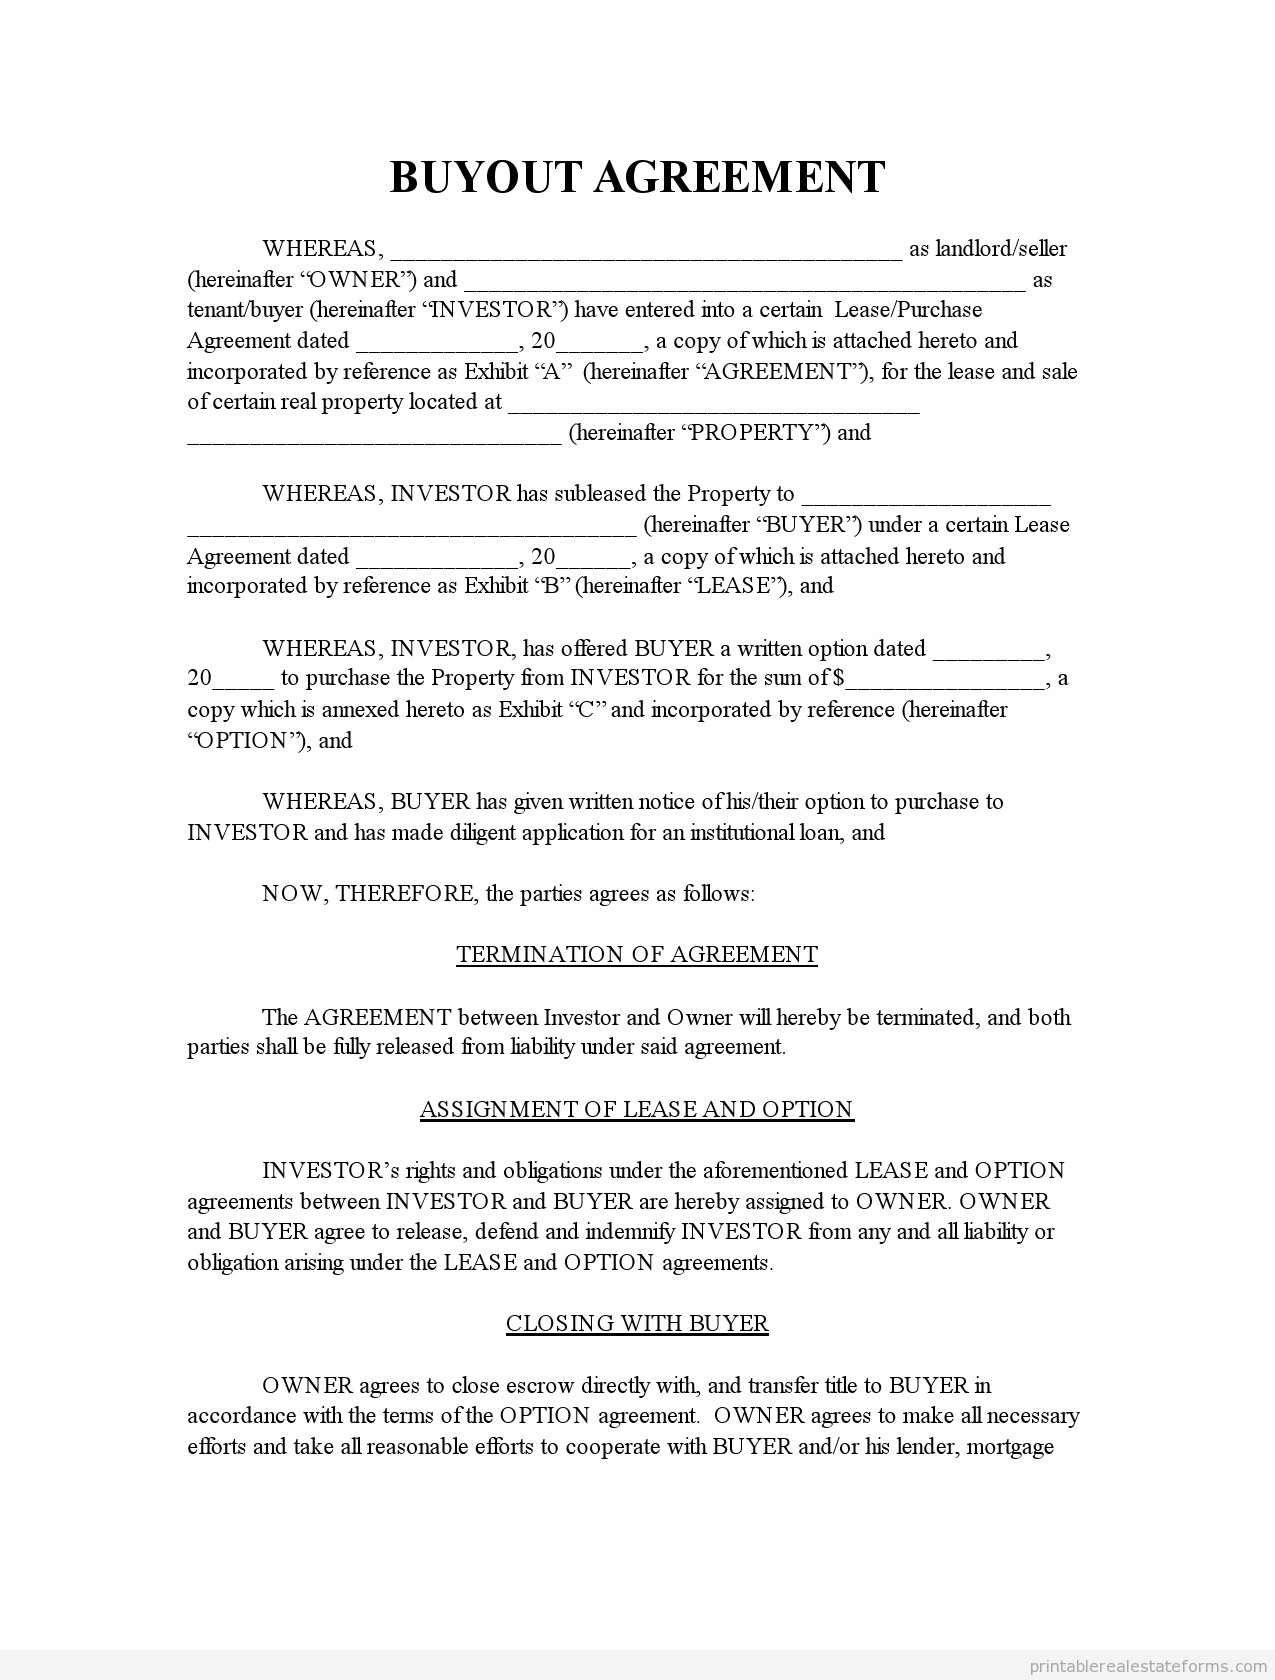 Free Printable Buyout Agreement Form PDF & WORD